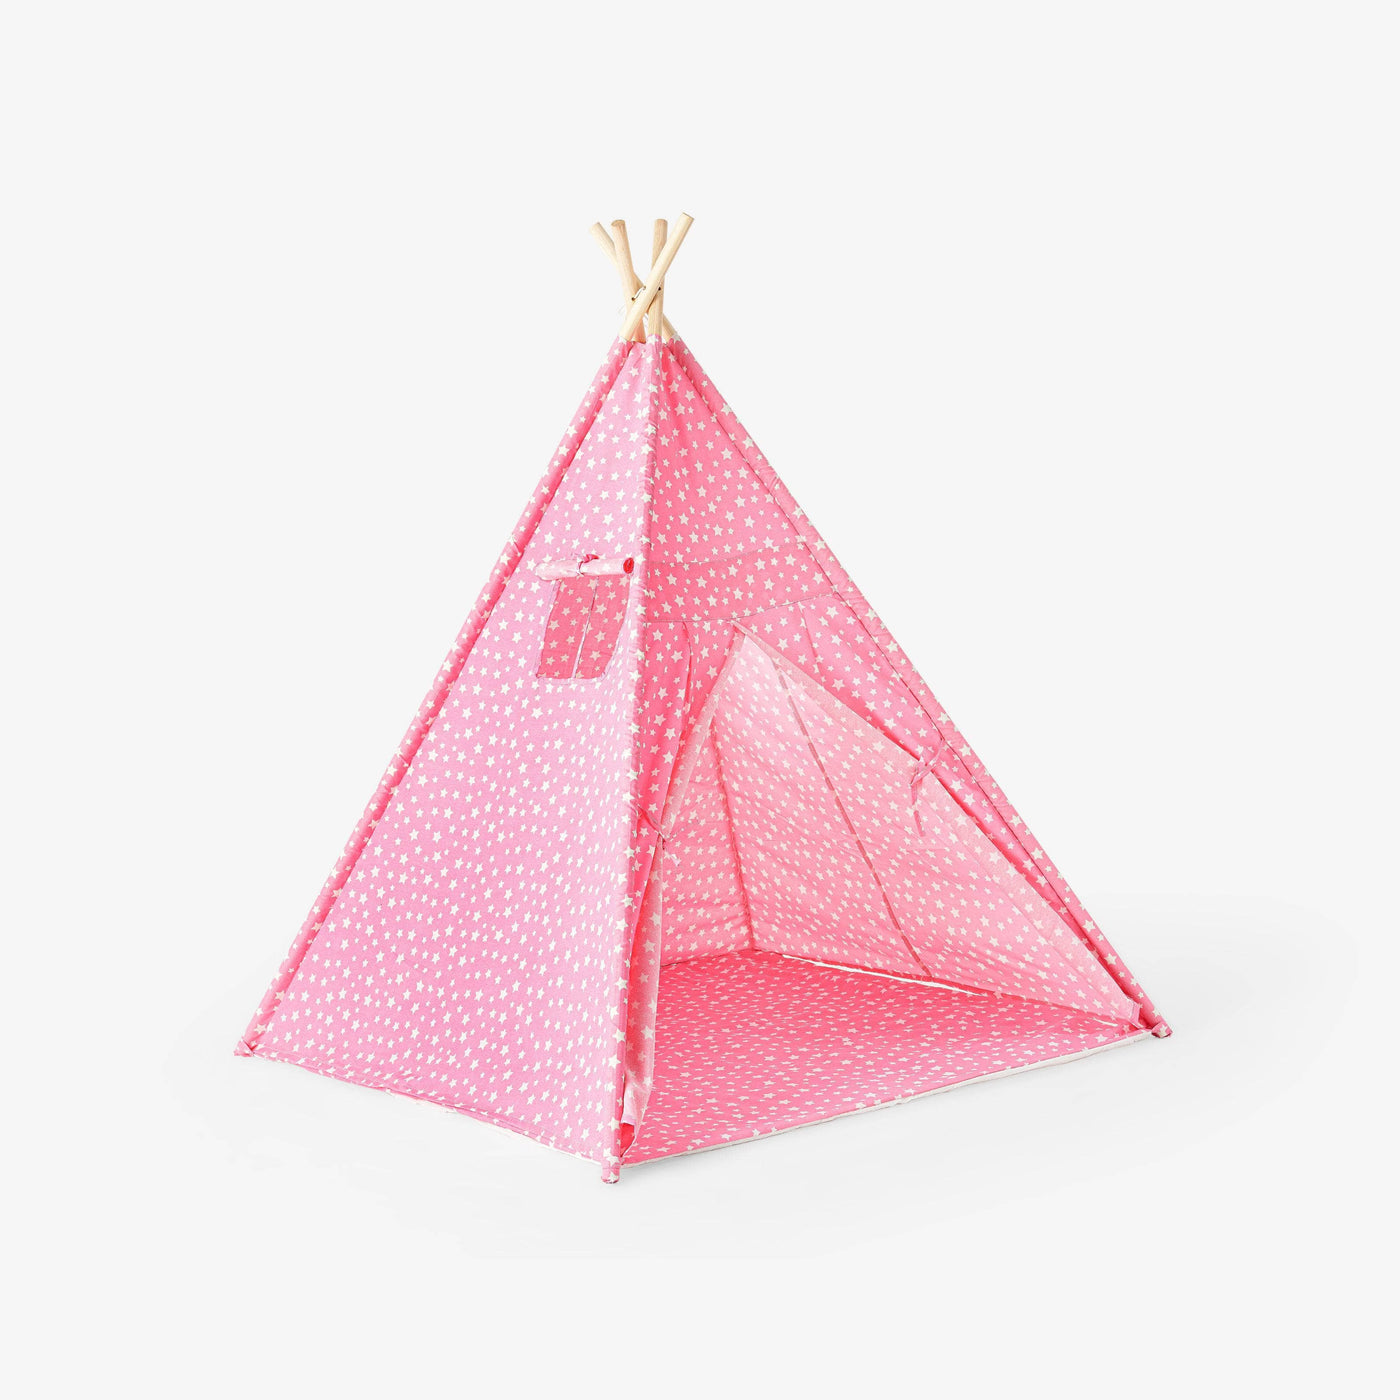 Teepee Play Tent, Pink, 115x115x160 cm - 1